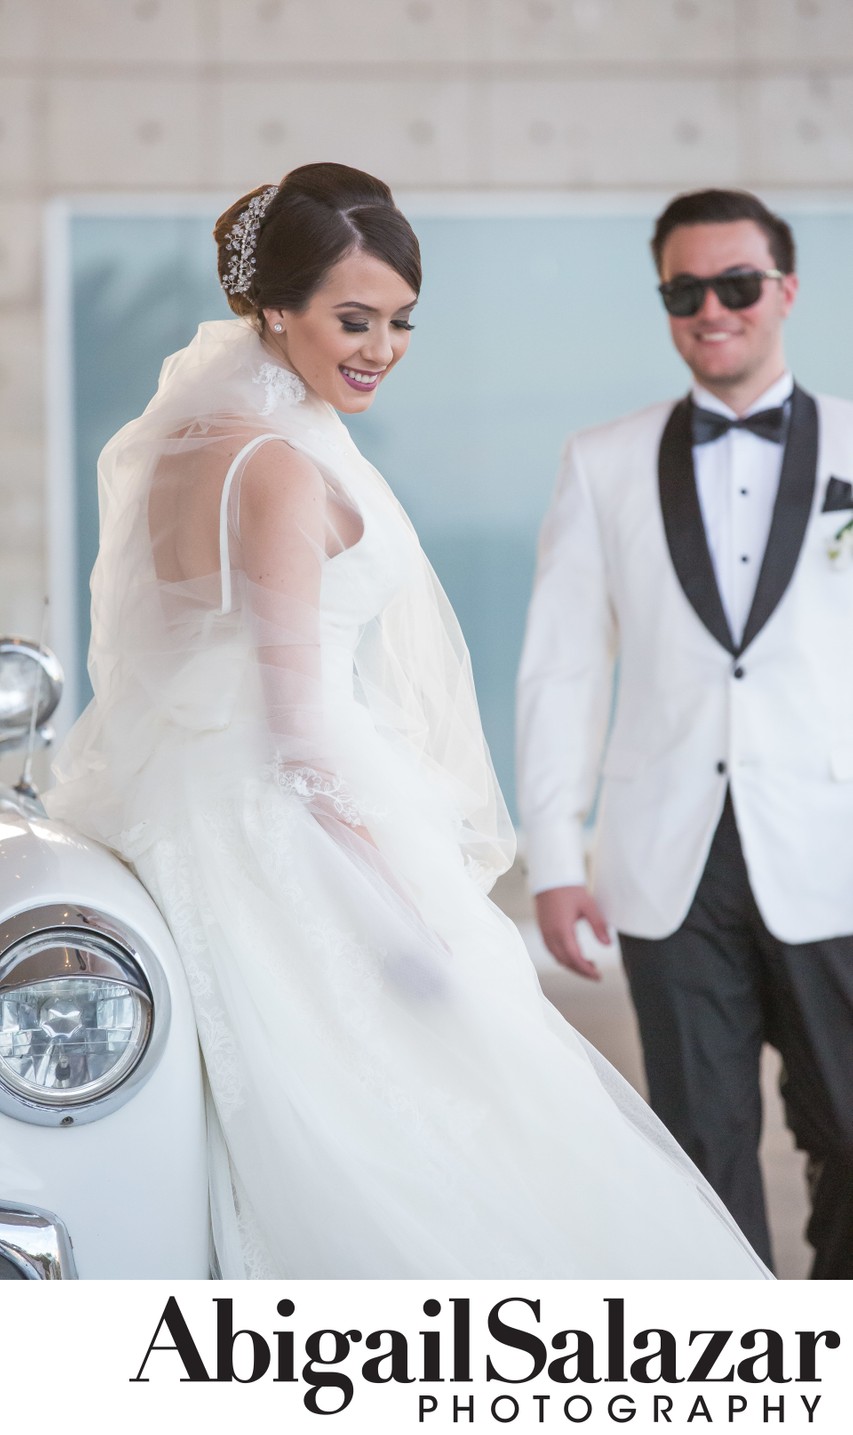 Wedding car portrait:  Stunning bride & cool groom